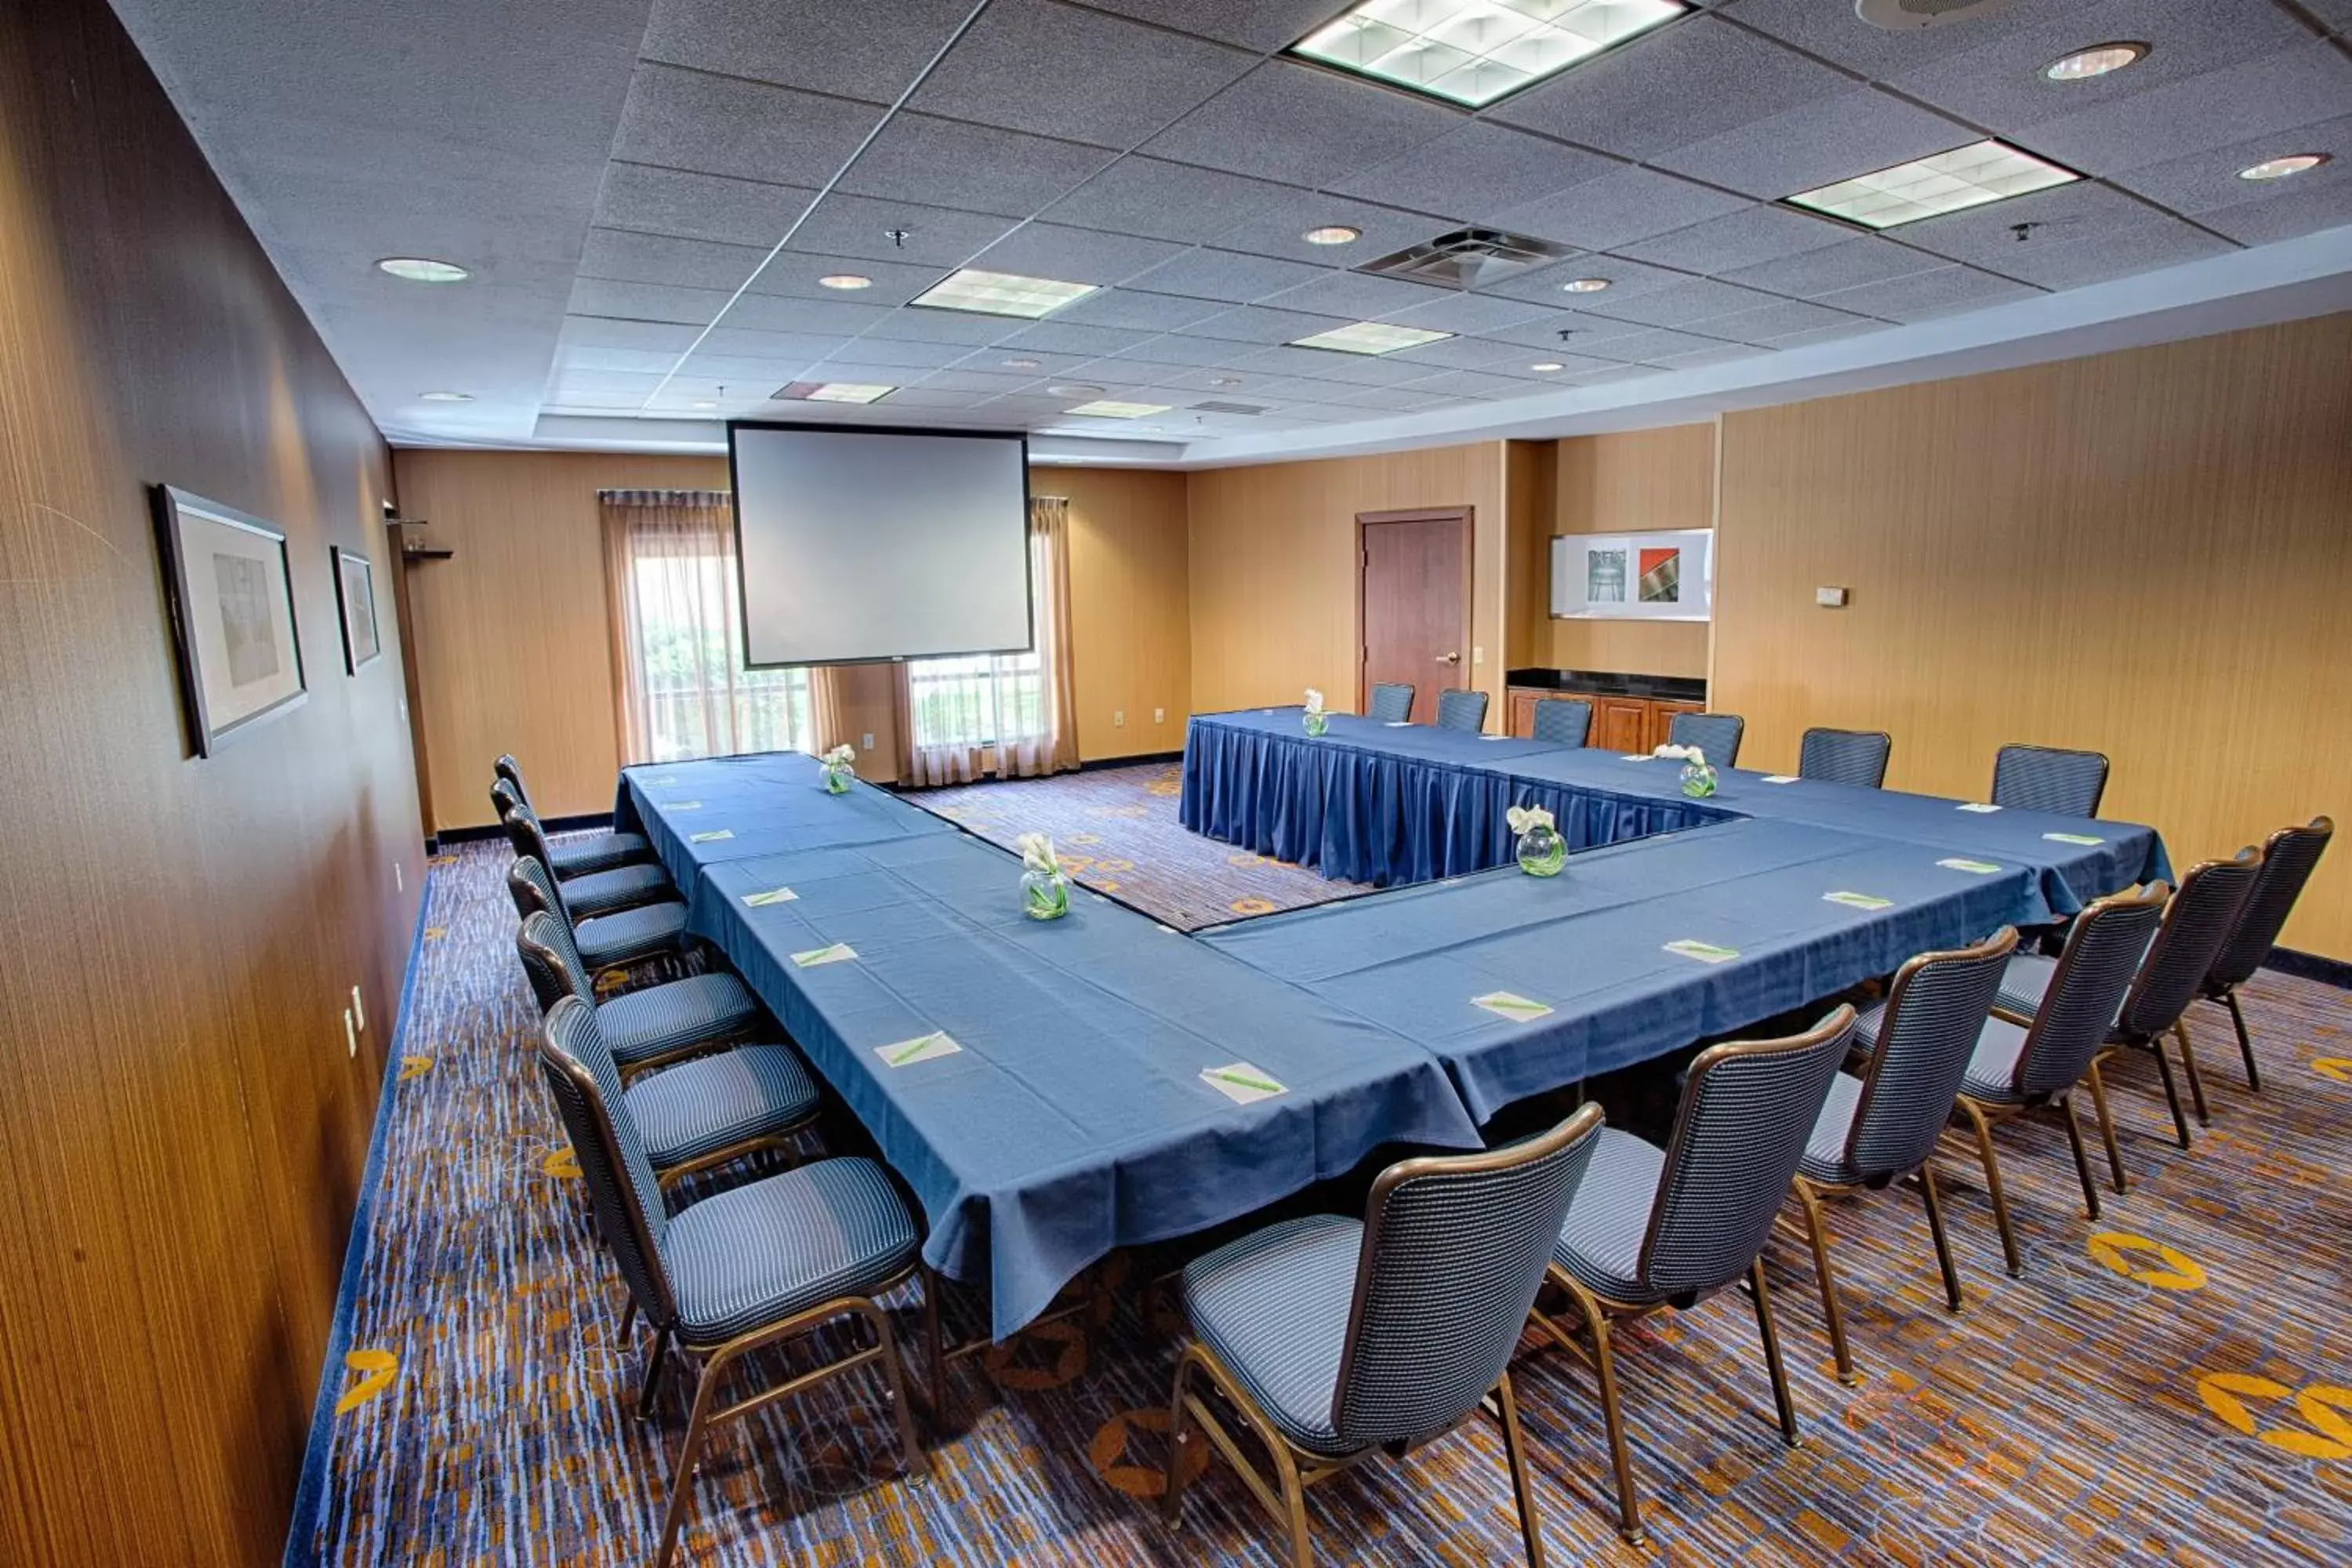 Meeting/conference room in Courtyard Fargo Moorhead, MN